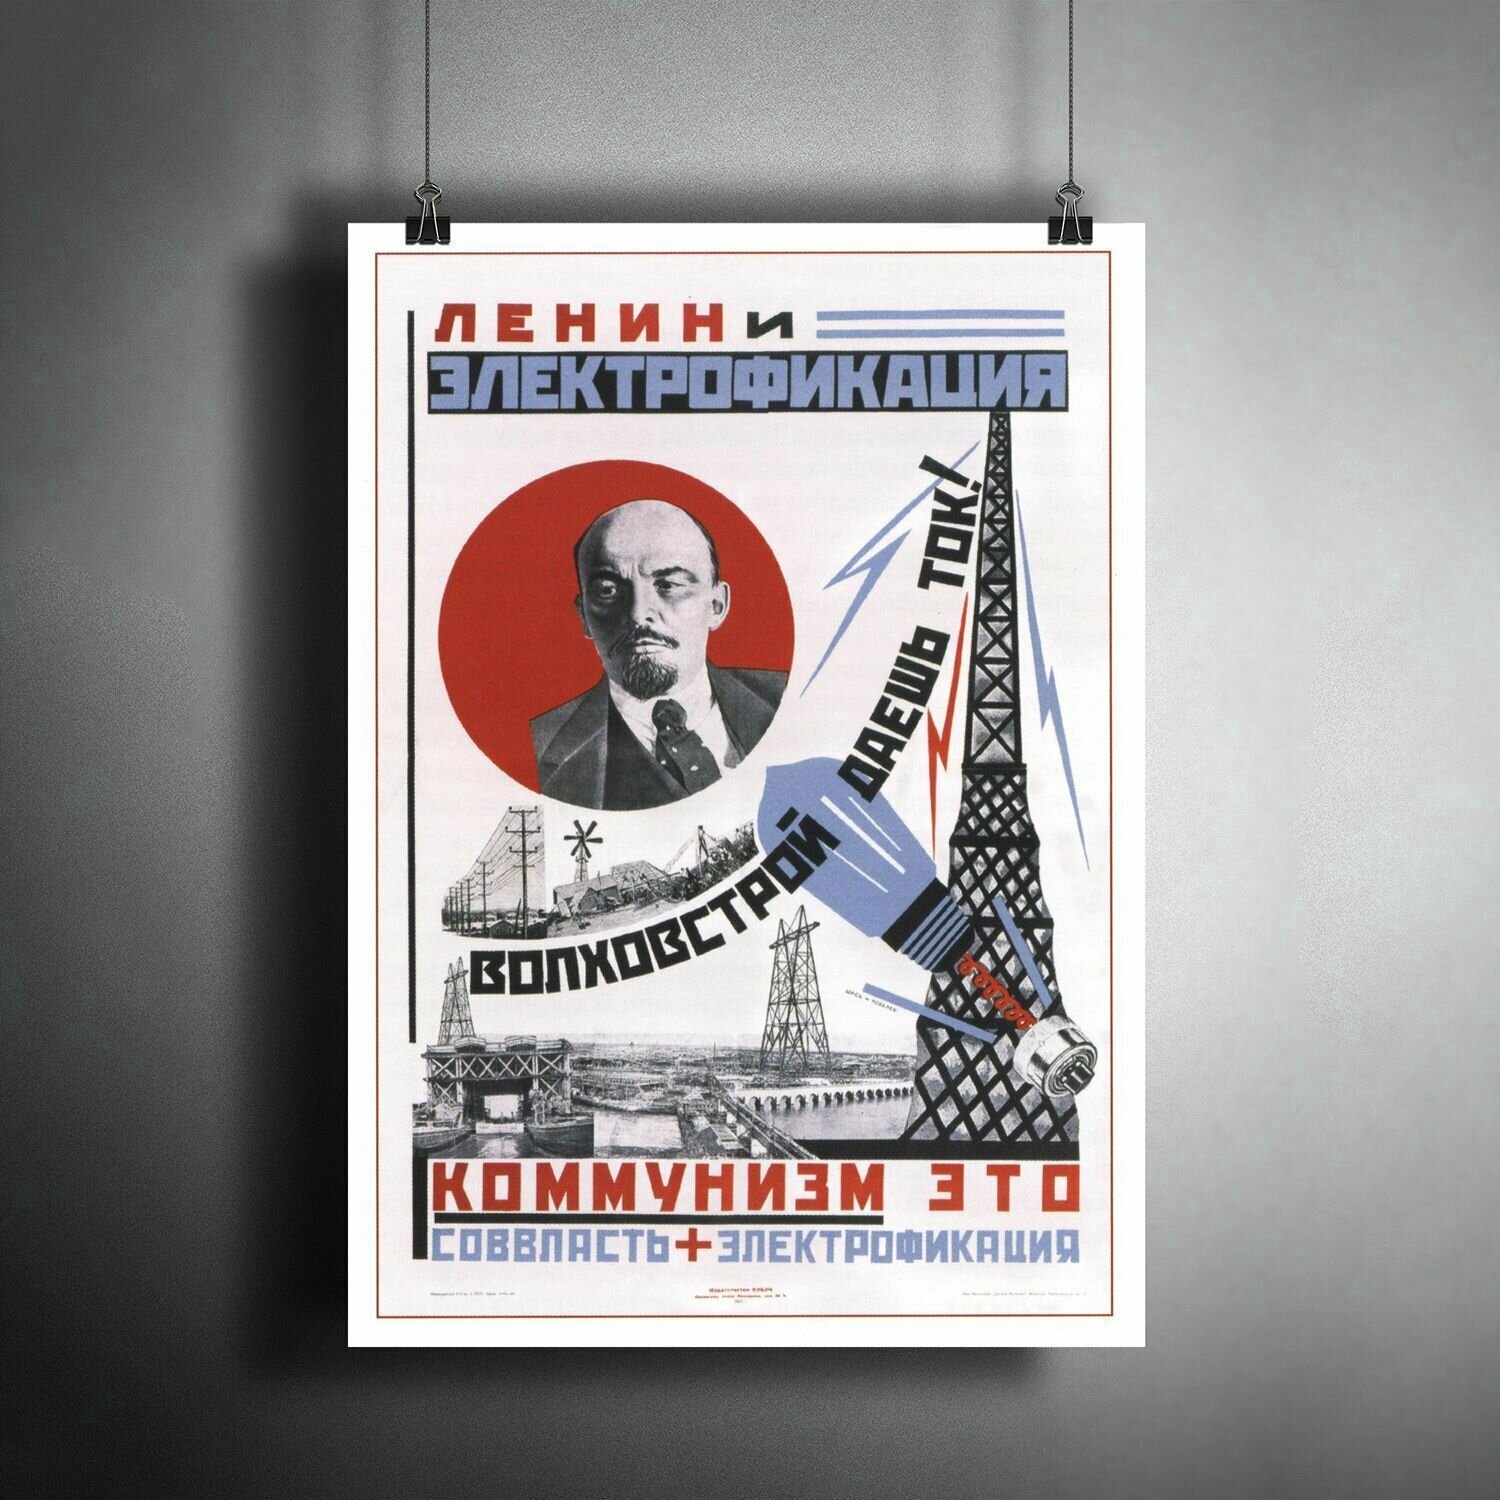 Постер плакат для интерьера "Советский плакат: Ленин и электрофикация" / Декор дома, офиса, комнаты, квартиры, детской A3 (297 x 420 мм)